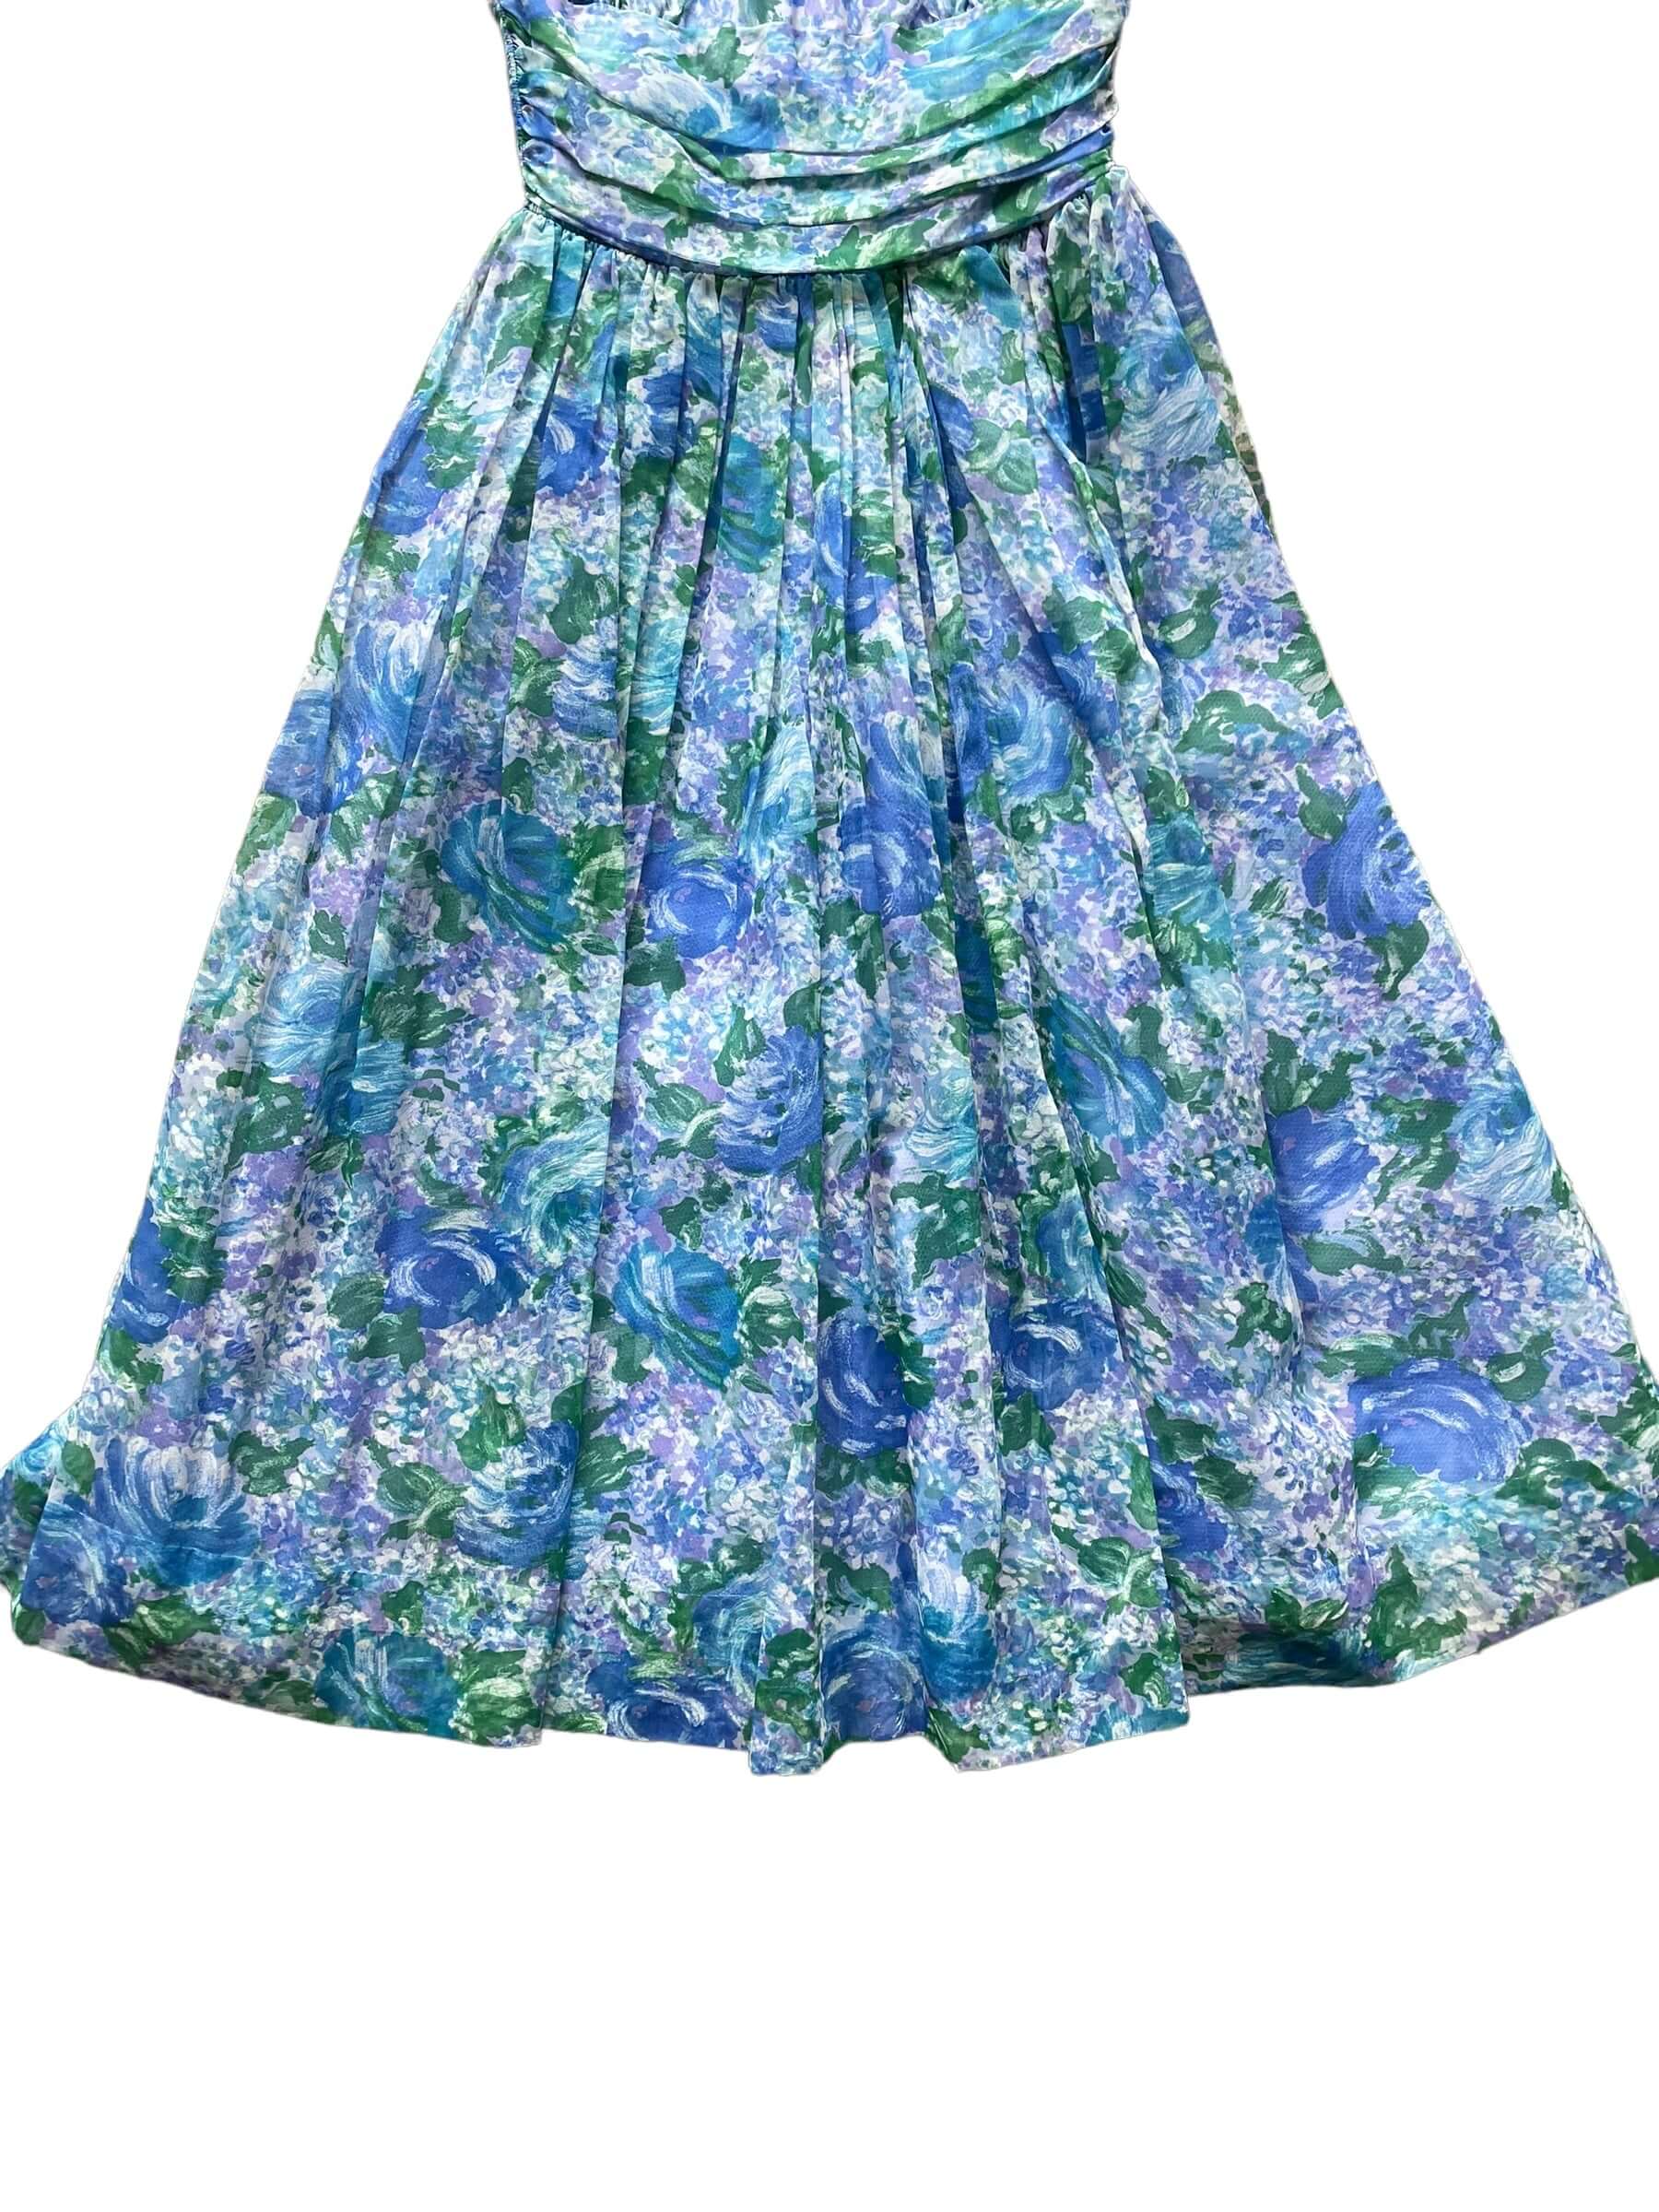 Front skirt view of Vintage 1950s Formal Blue Floral Dress SZ XS | Seattle True Vintage Dresses | Barn Owl Vintage Ladies Clothing